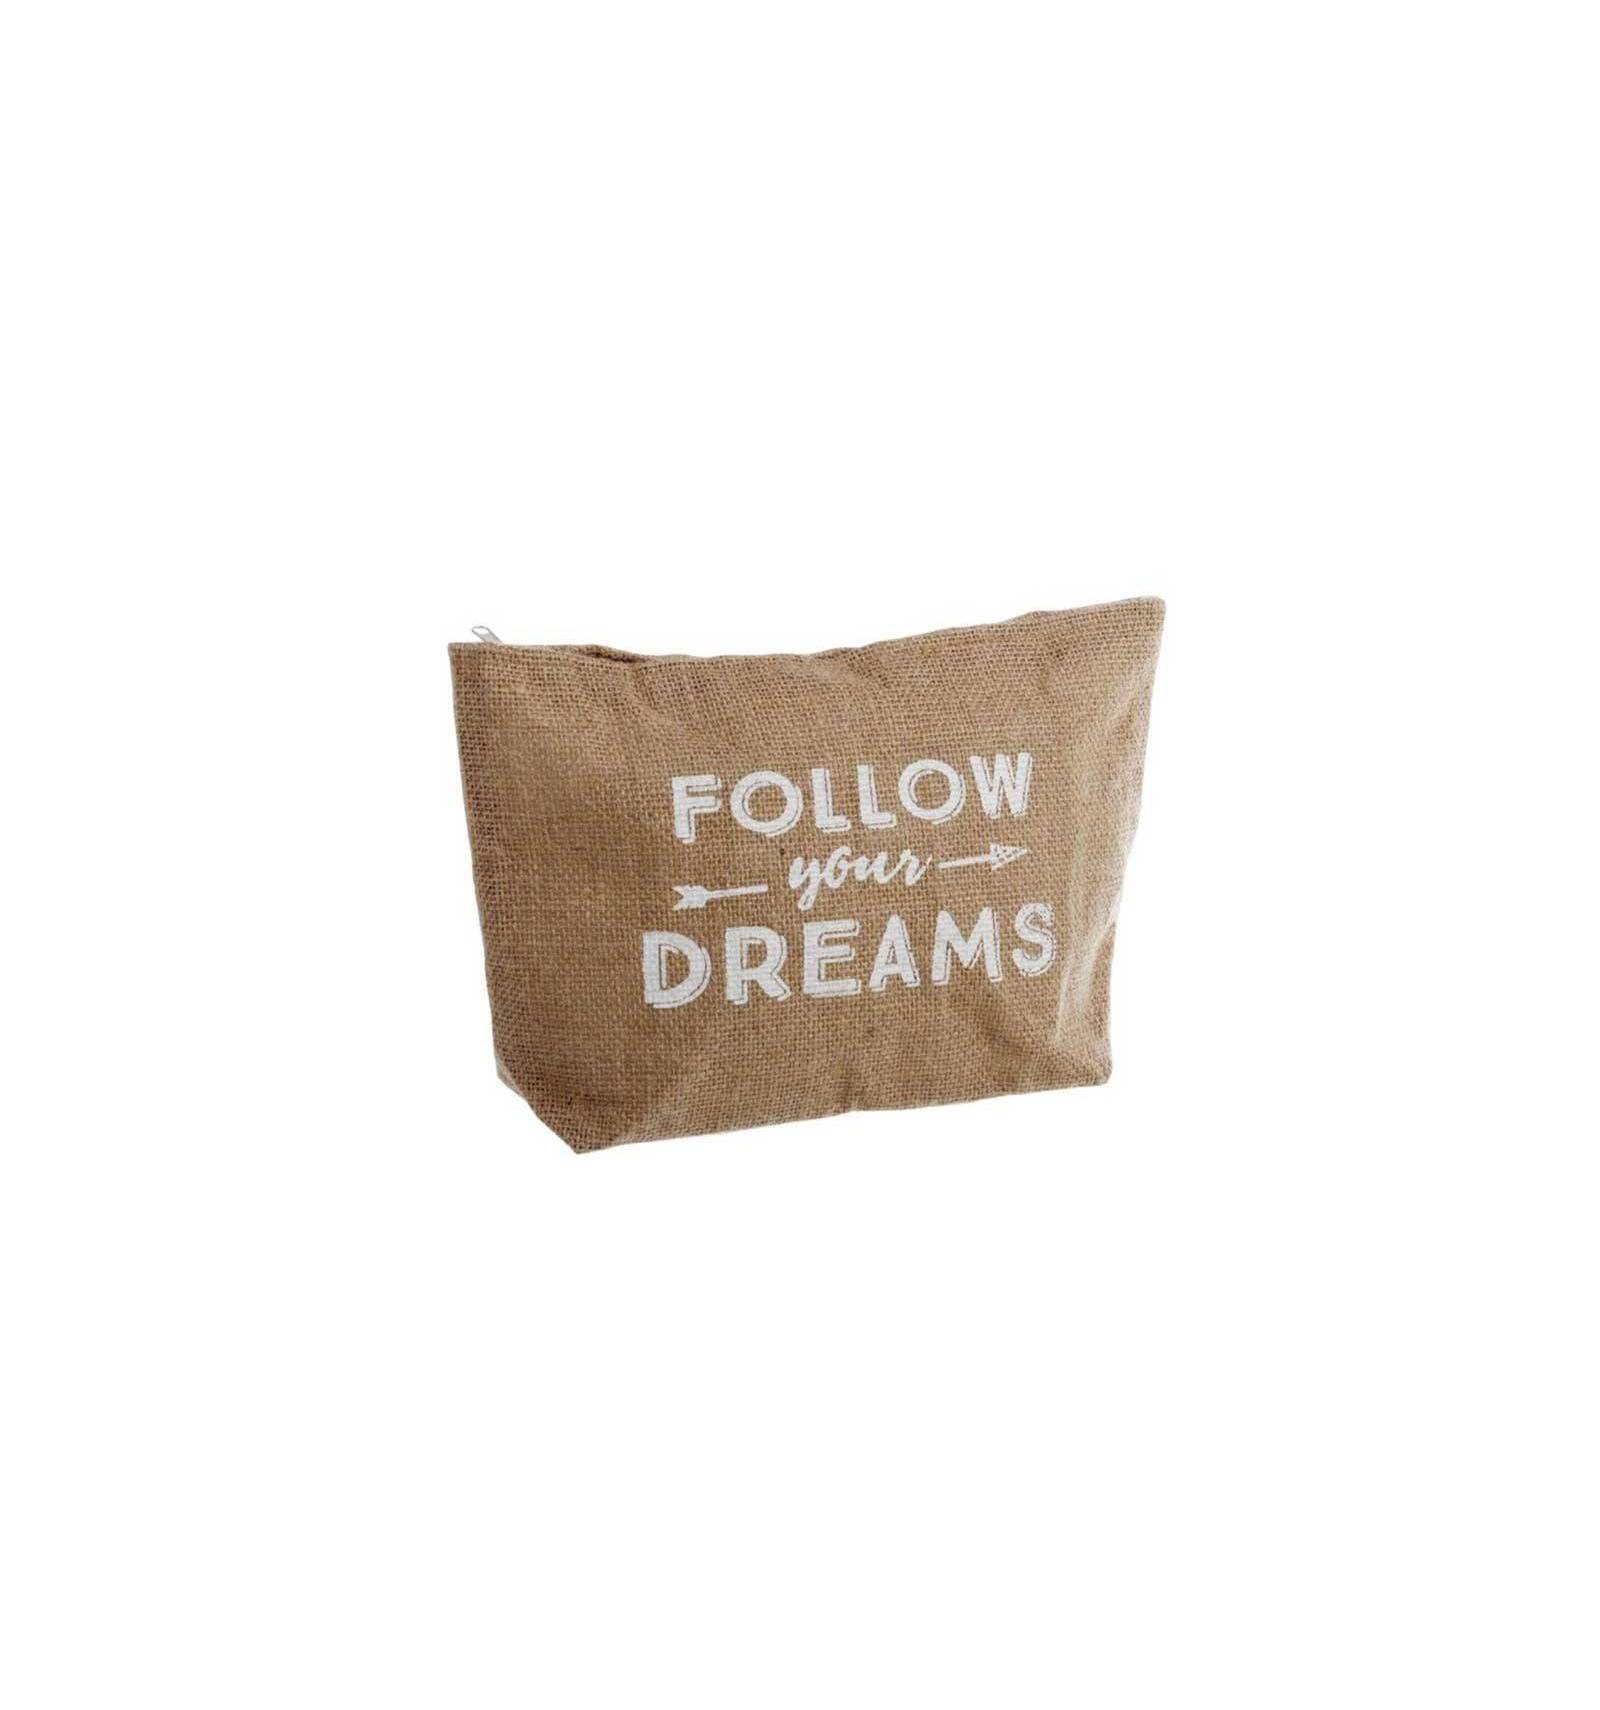 Neceser- Follow your dreams